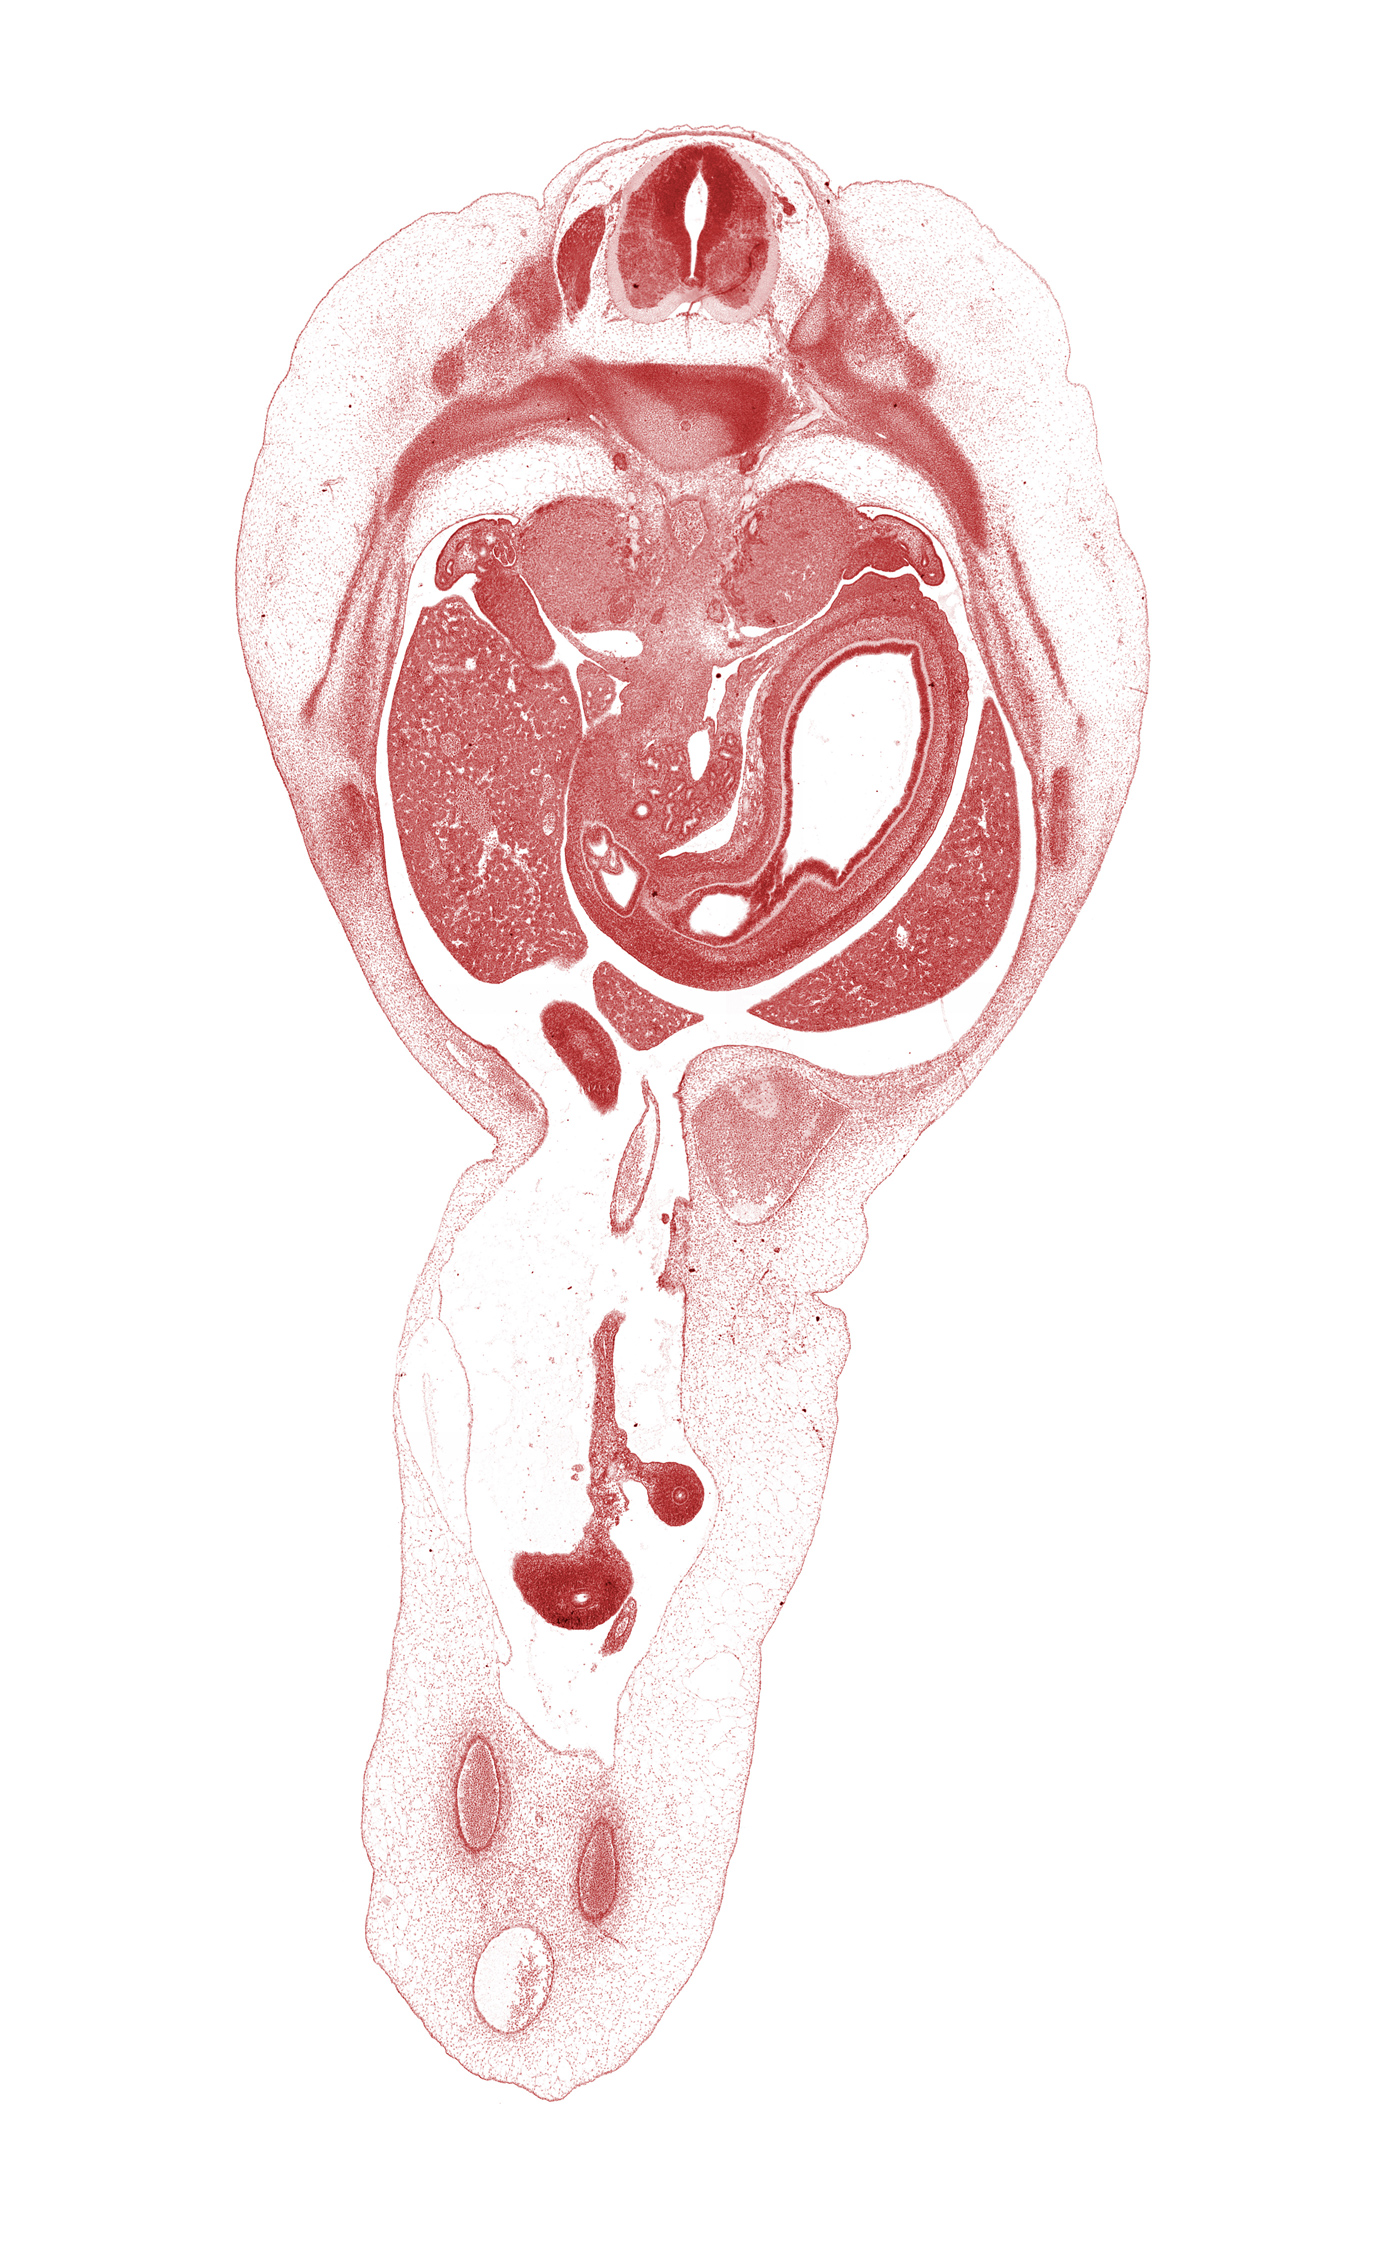 T-10 / T-11 interganglion region, T-11 / T-12 intervertebral disc, T-11 intercostal nerve, dorsal pancreas, duodenum, duodenum bulb, gonadal ridge, hepatic portal vein, left lobe of liver, left umbilical artery, lumen of body of stomach, mesentery of herniated midgut, midpoint of midgut, neural arch, omphalomesenteric artery, pyloric antrum of stomach, pylorus of stomach, right lobe of liver, right umbilical artery, superior mesenteric artery, suprarenal gland cortex, sympathetic trunk, umbilical vein